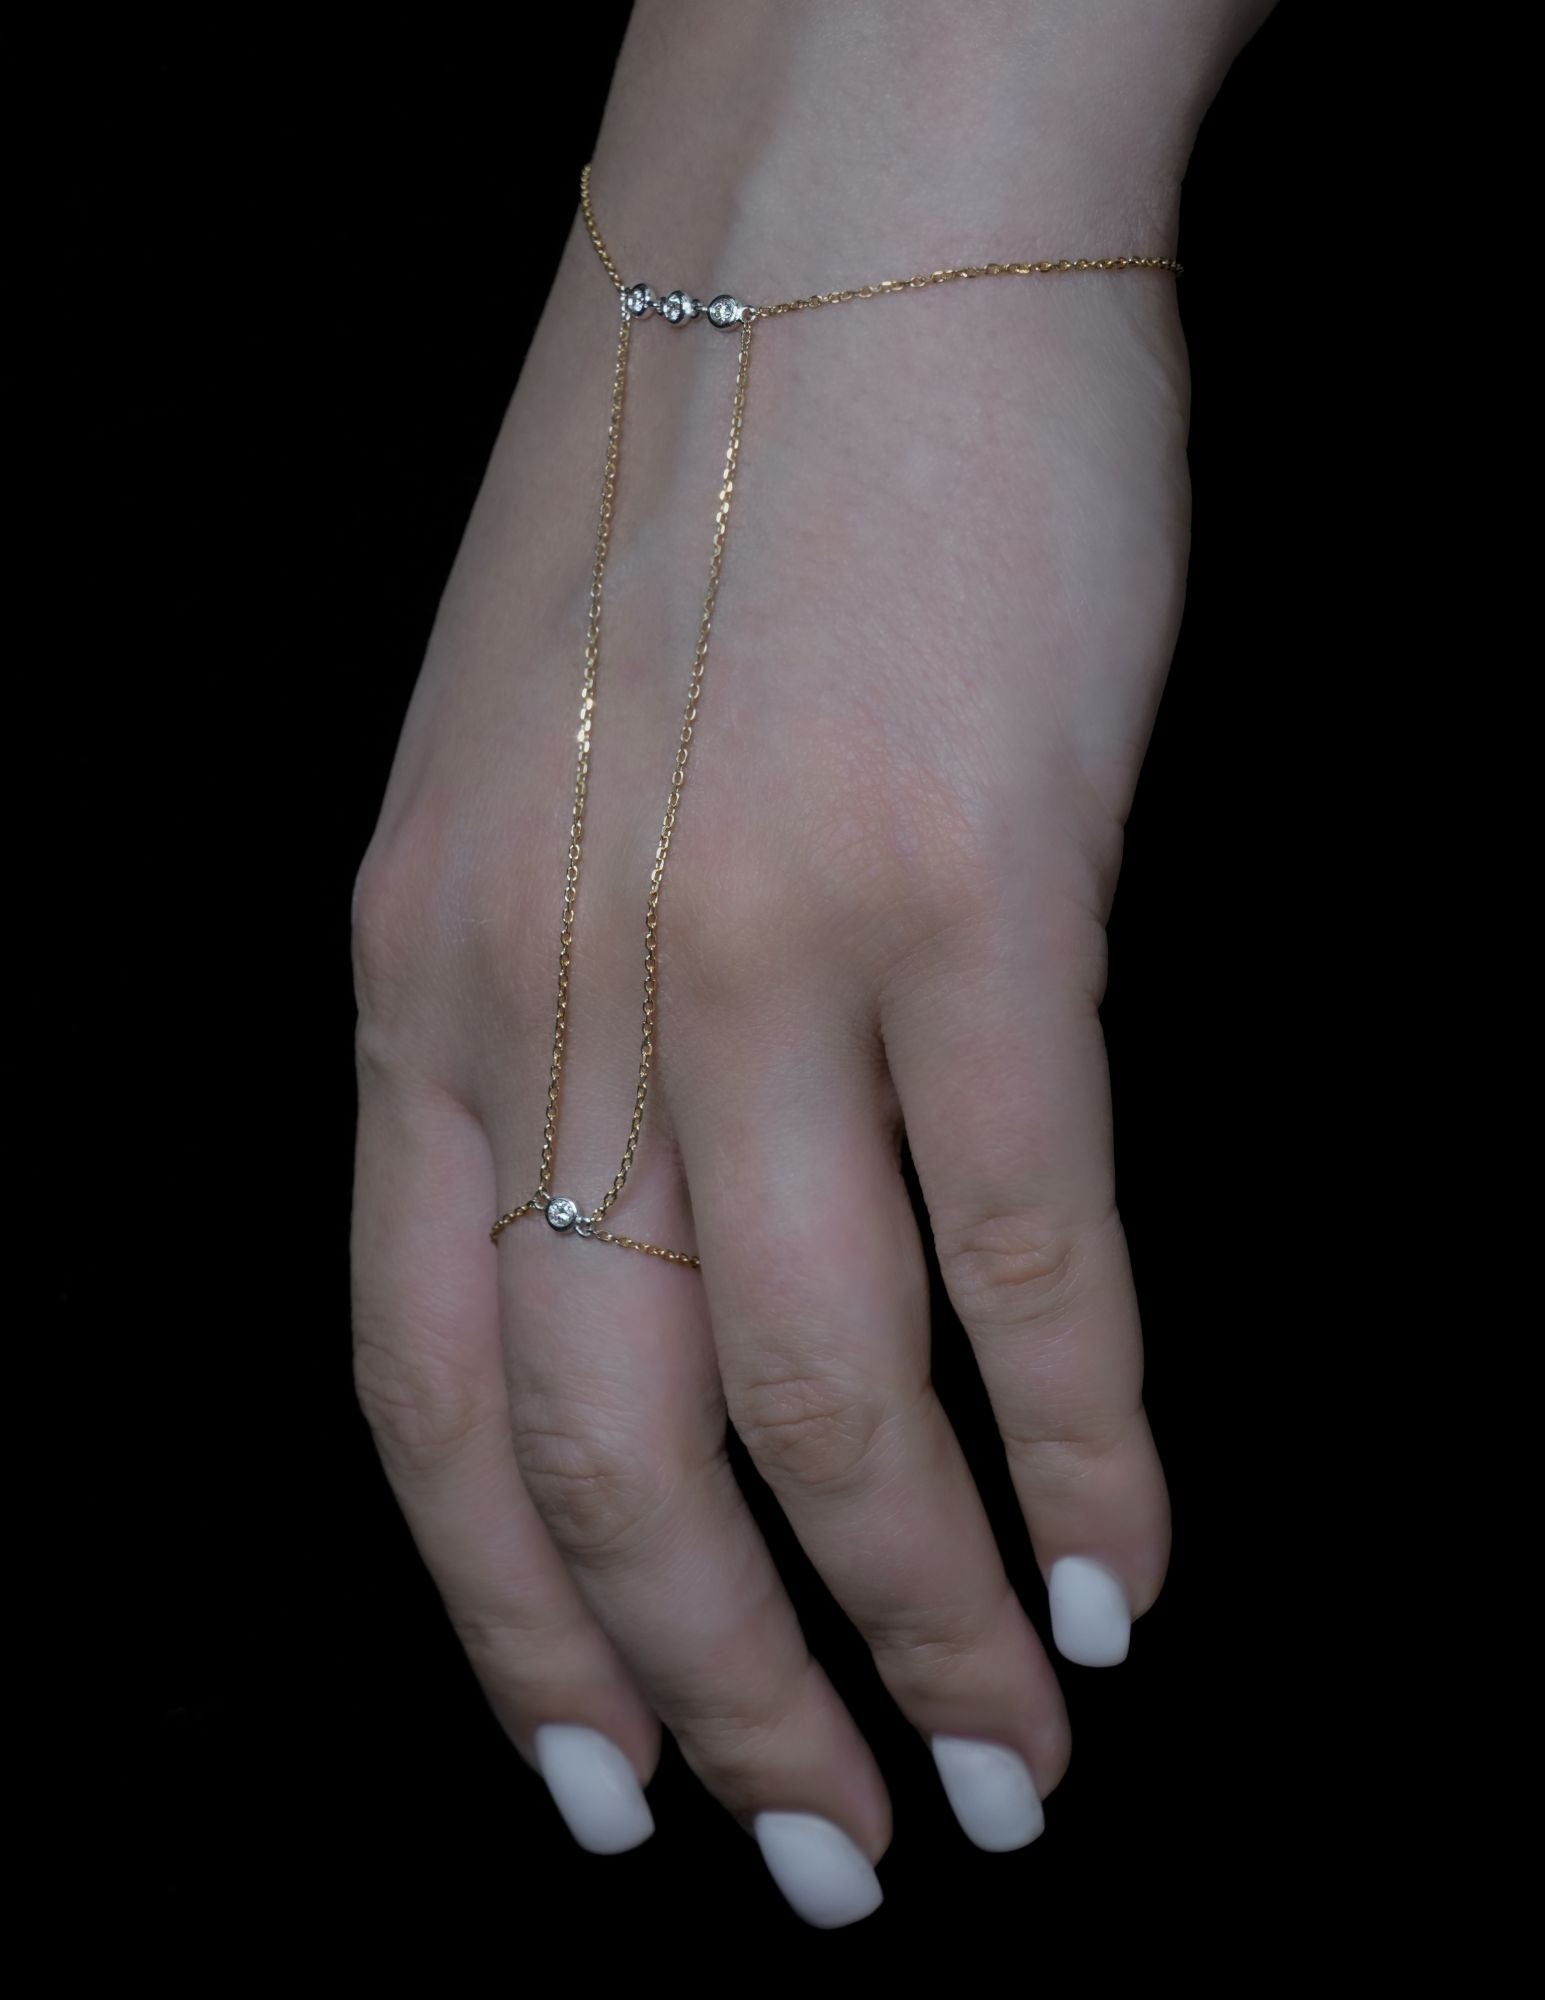 Anna Handchain by Carisma Jewelry